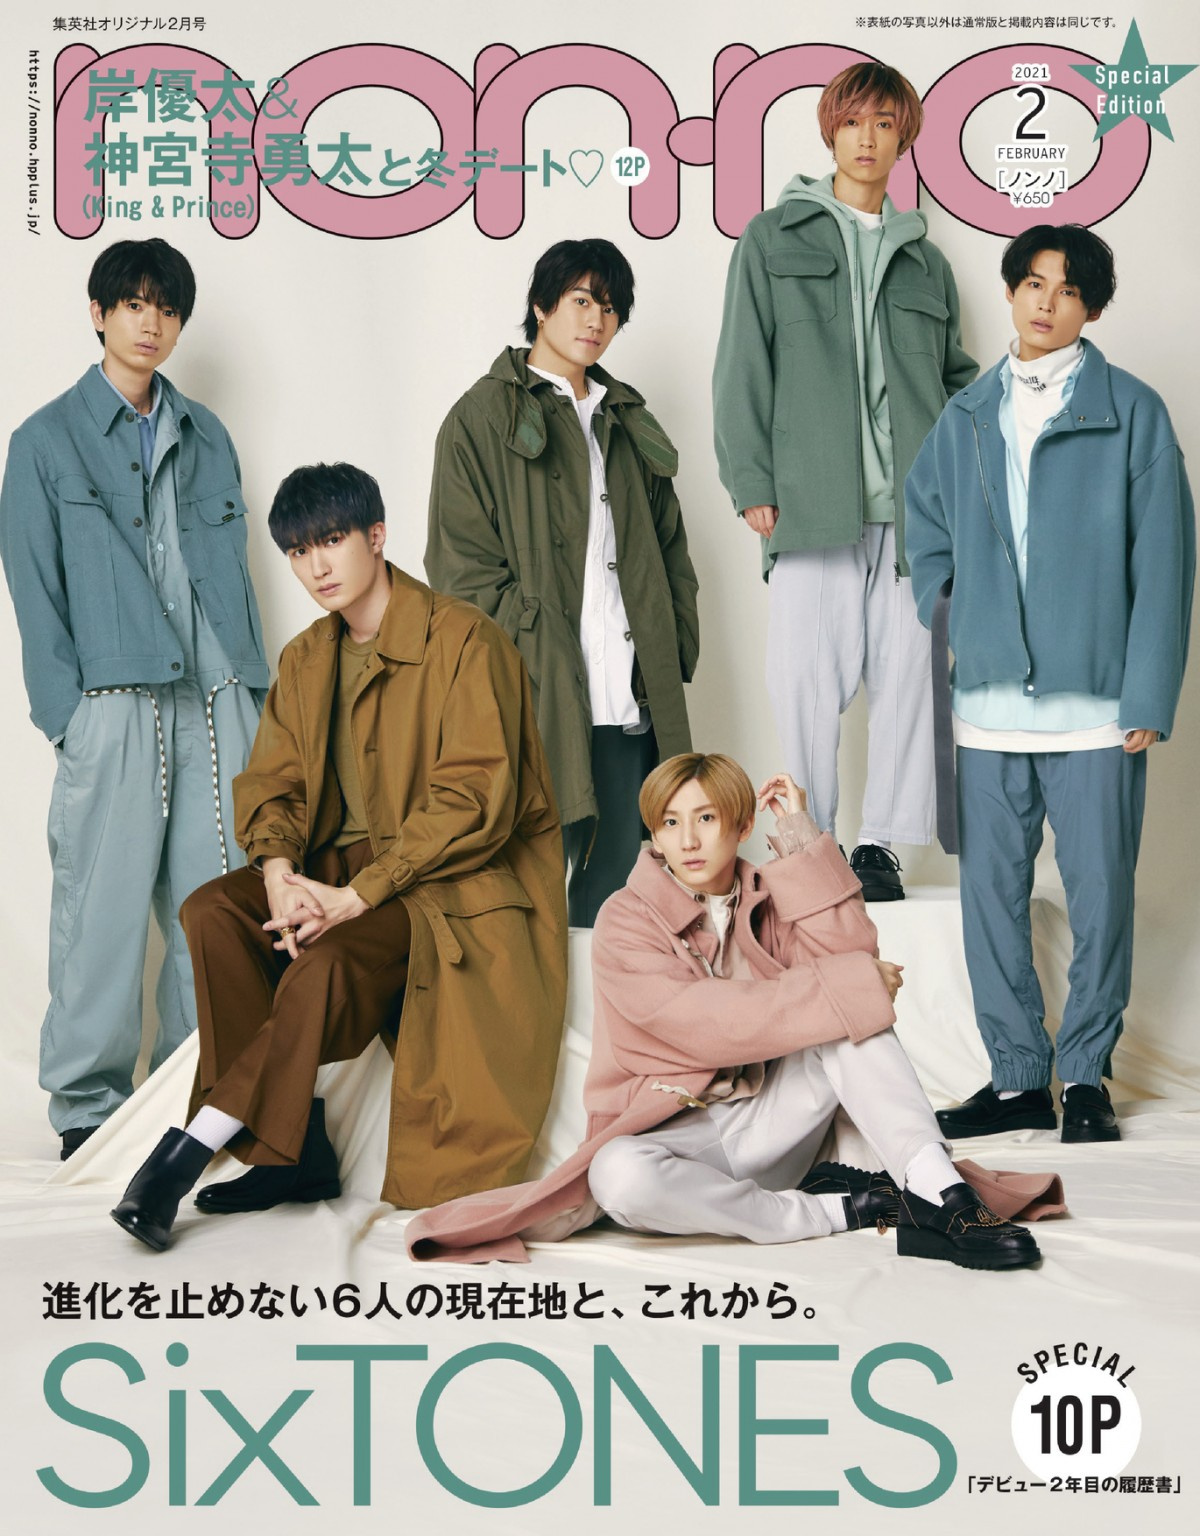 Sixtones 約1年ぶり Non No 表紙 デビュー2年目 21年の漢字を発表 Oricon News